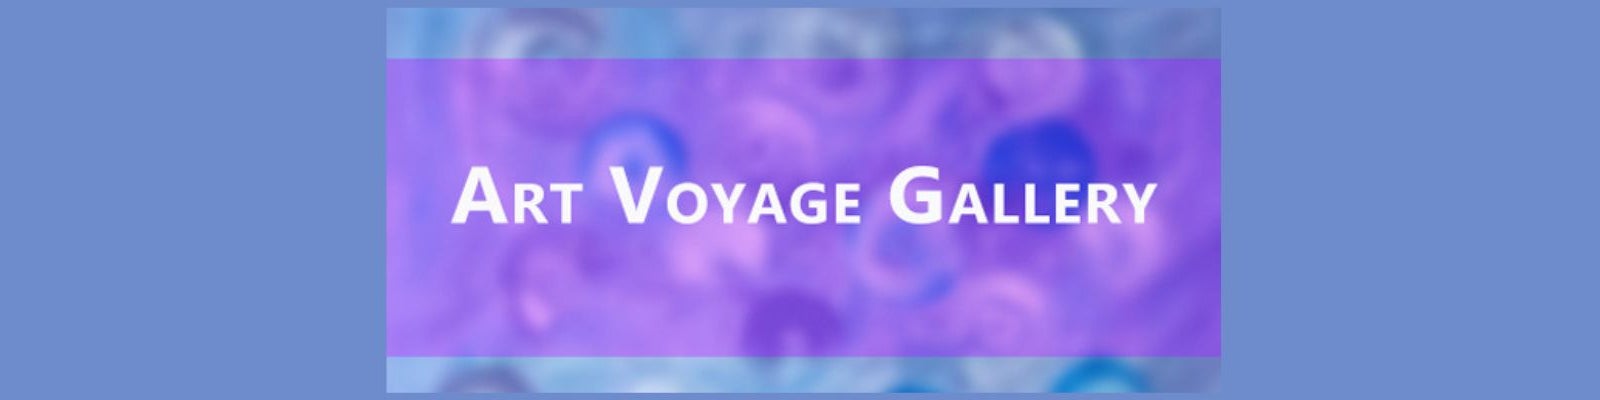 Art Voyage Gallery